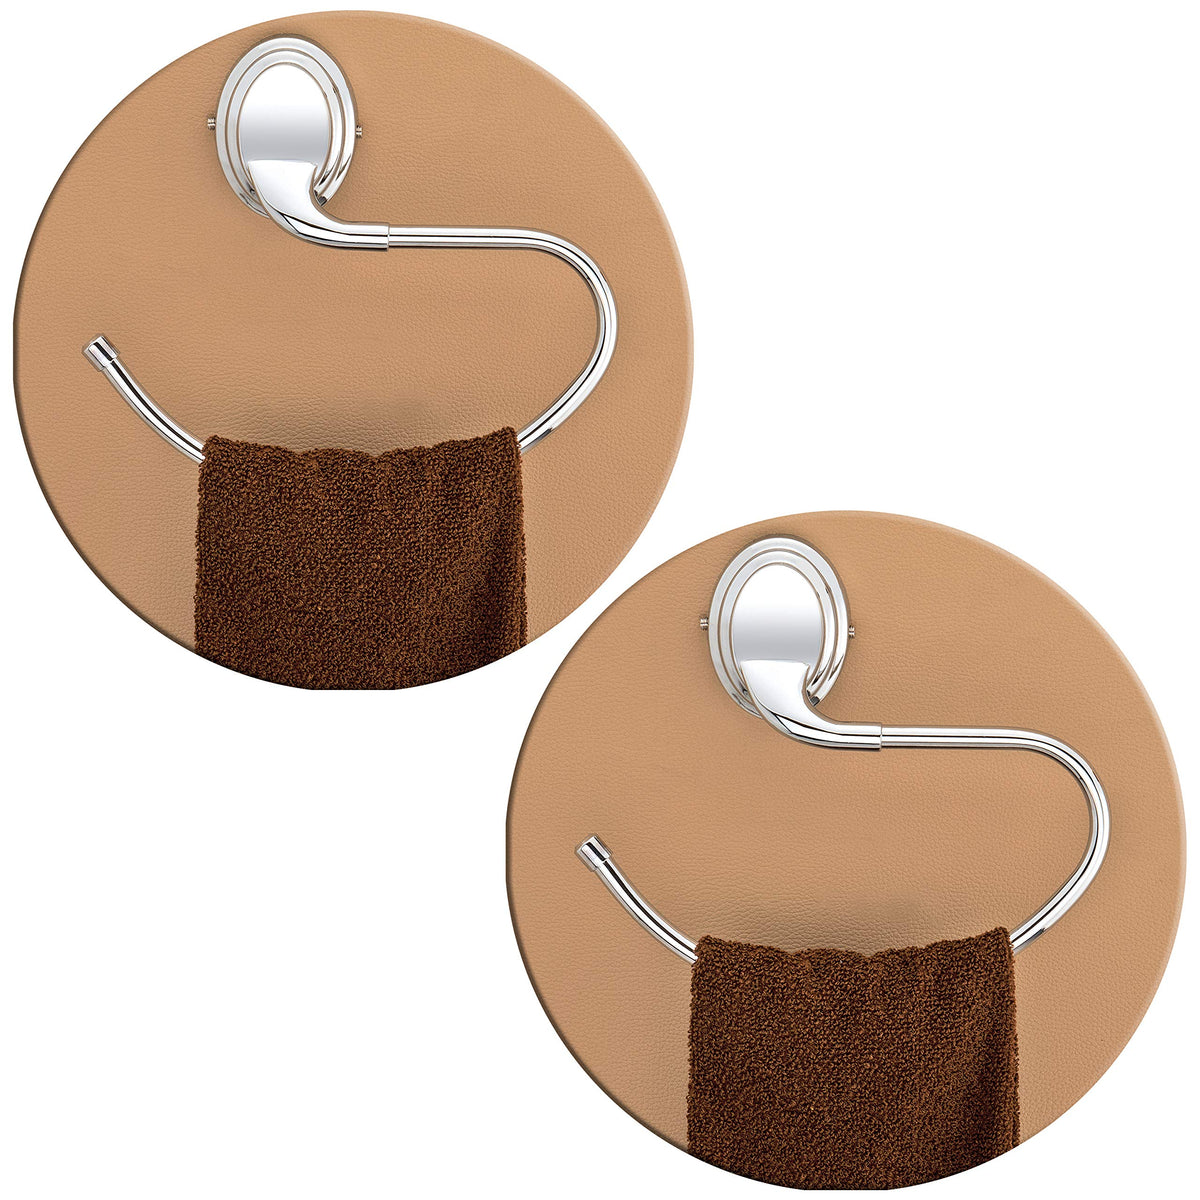 Plantex Stainless Steel 304 Grade Cubic Napkin Ring/Towel Ring/Napkin Holder/Towel Hanger/Bathroom Accessories(Chrome) - Pack of 2